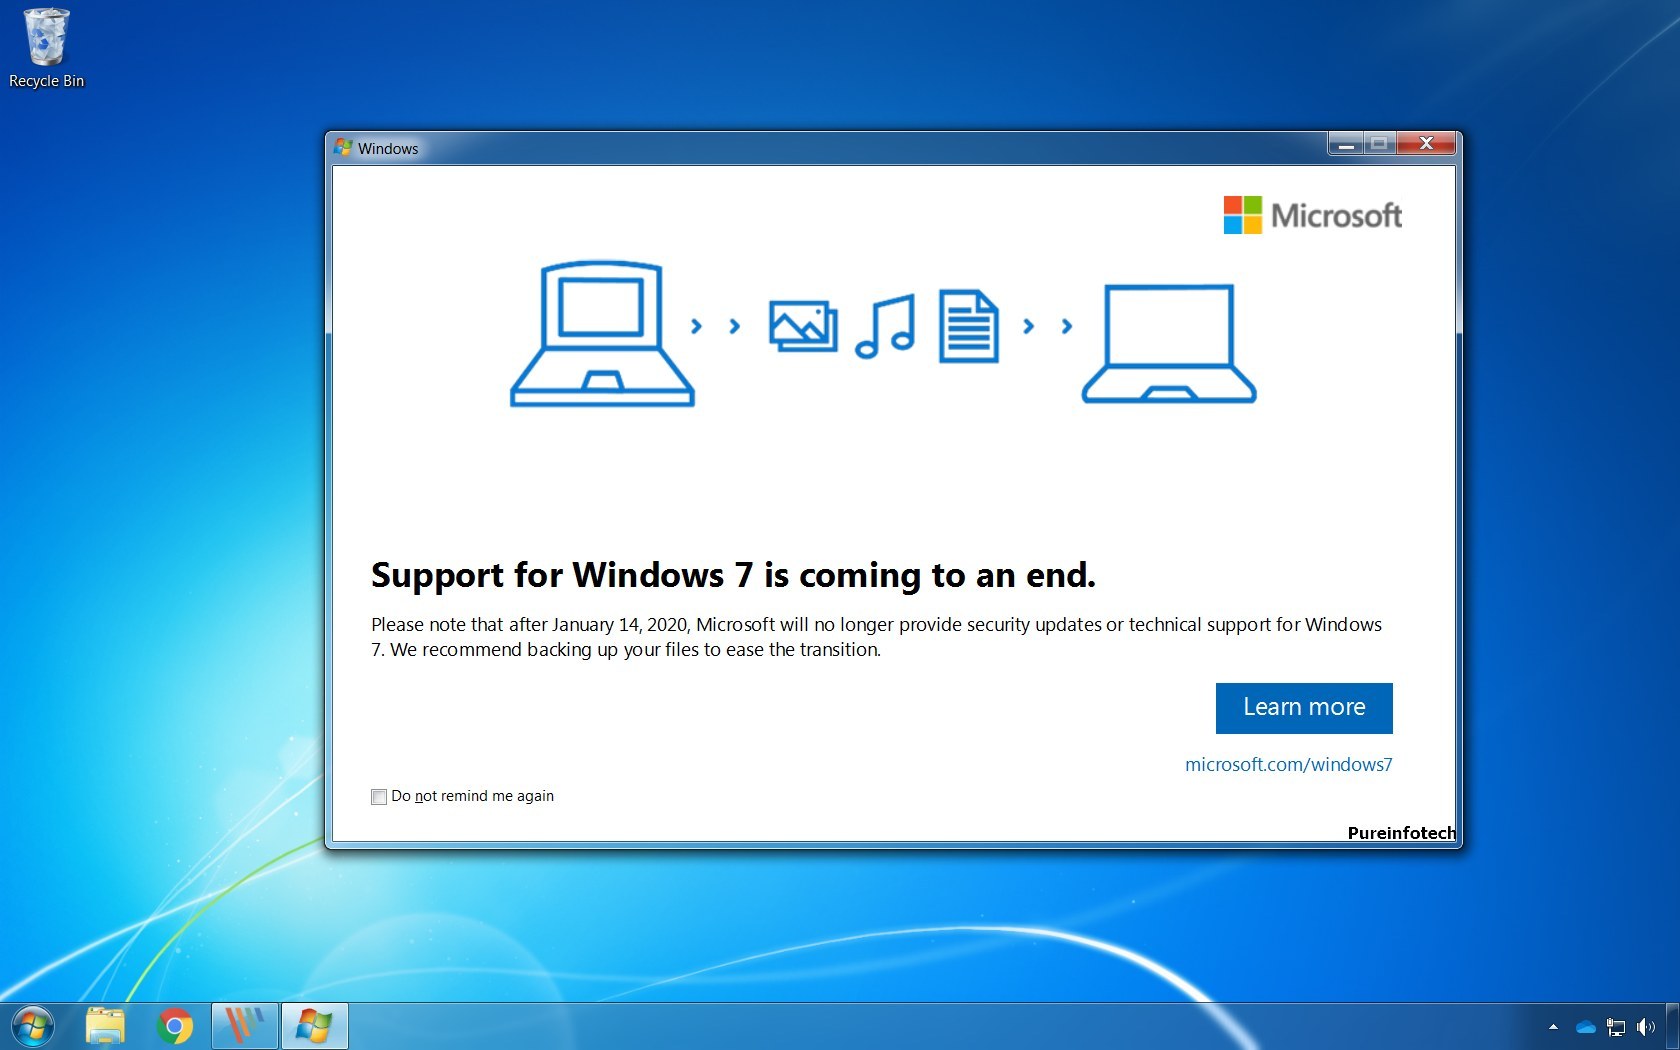 Windows 7 live chat help